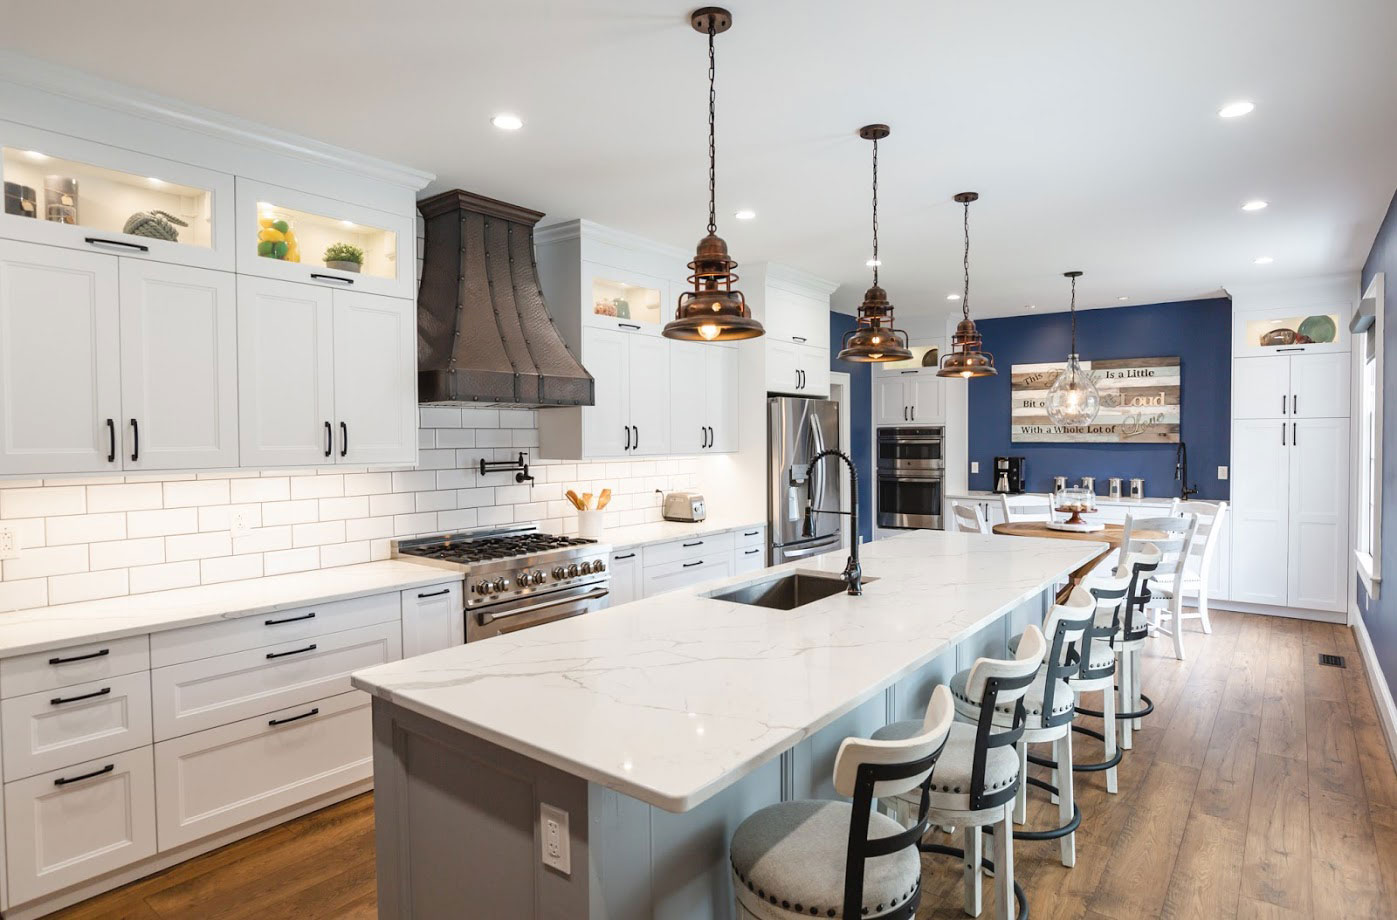 Extraordinary coastal kitchen design featuring wood kitchen cabinets, white kitchen countertops, brick backsplash is enhanced by a sleek range hood